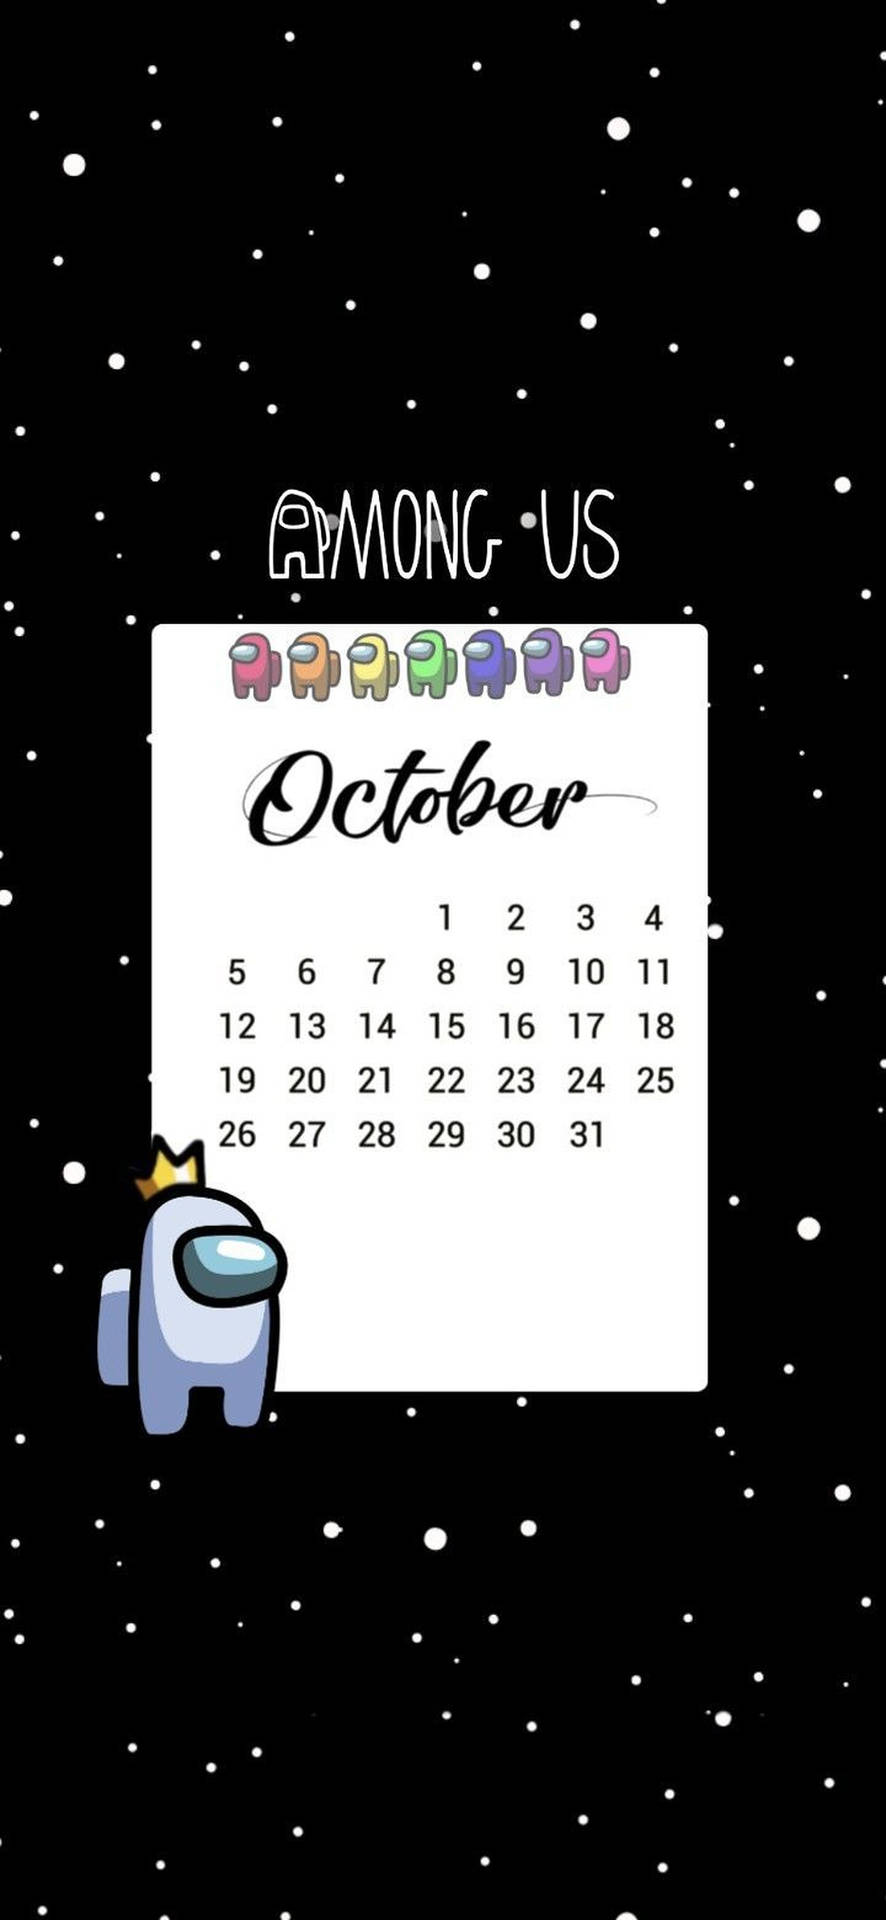 Among Us Space October Calendar Wallpaper